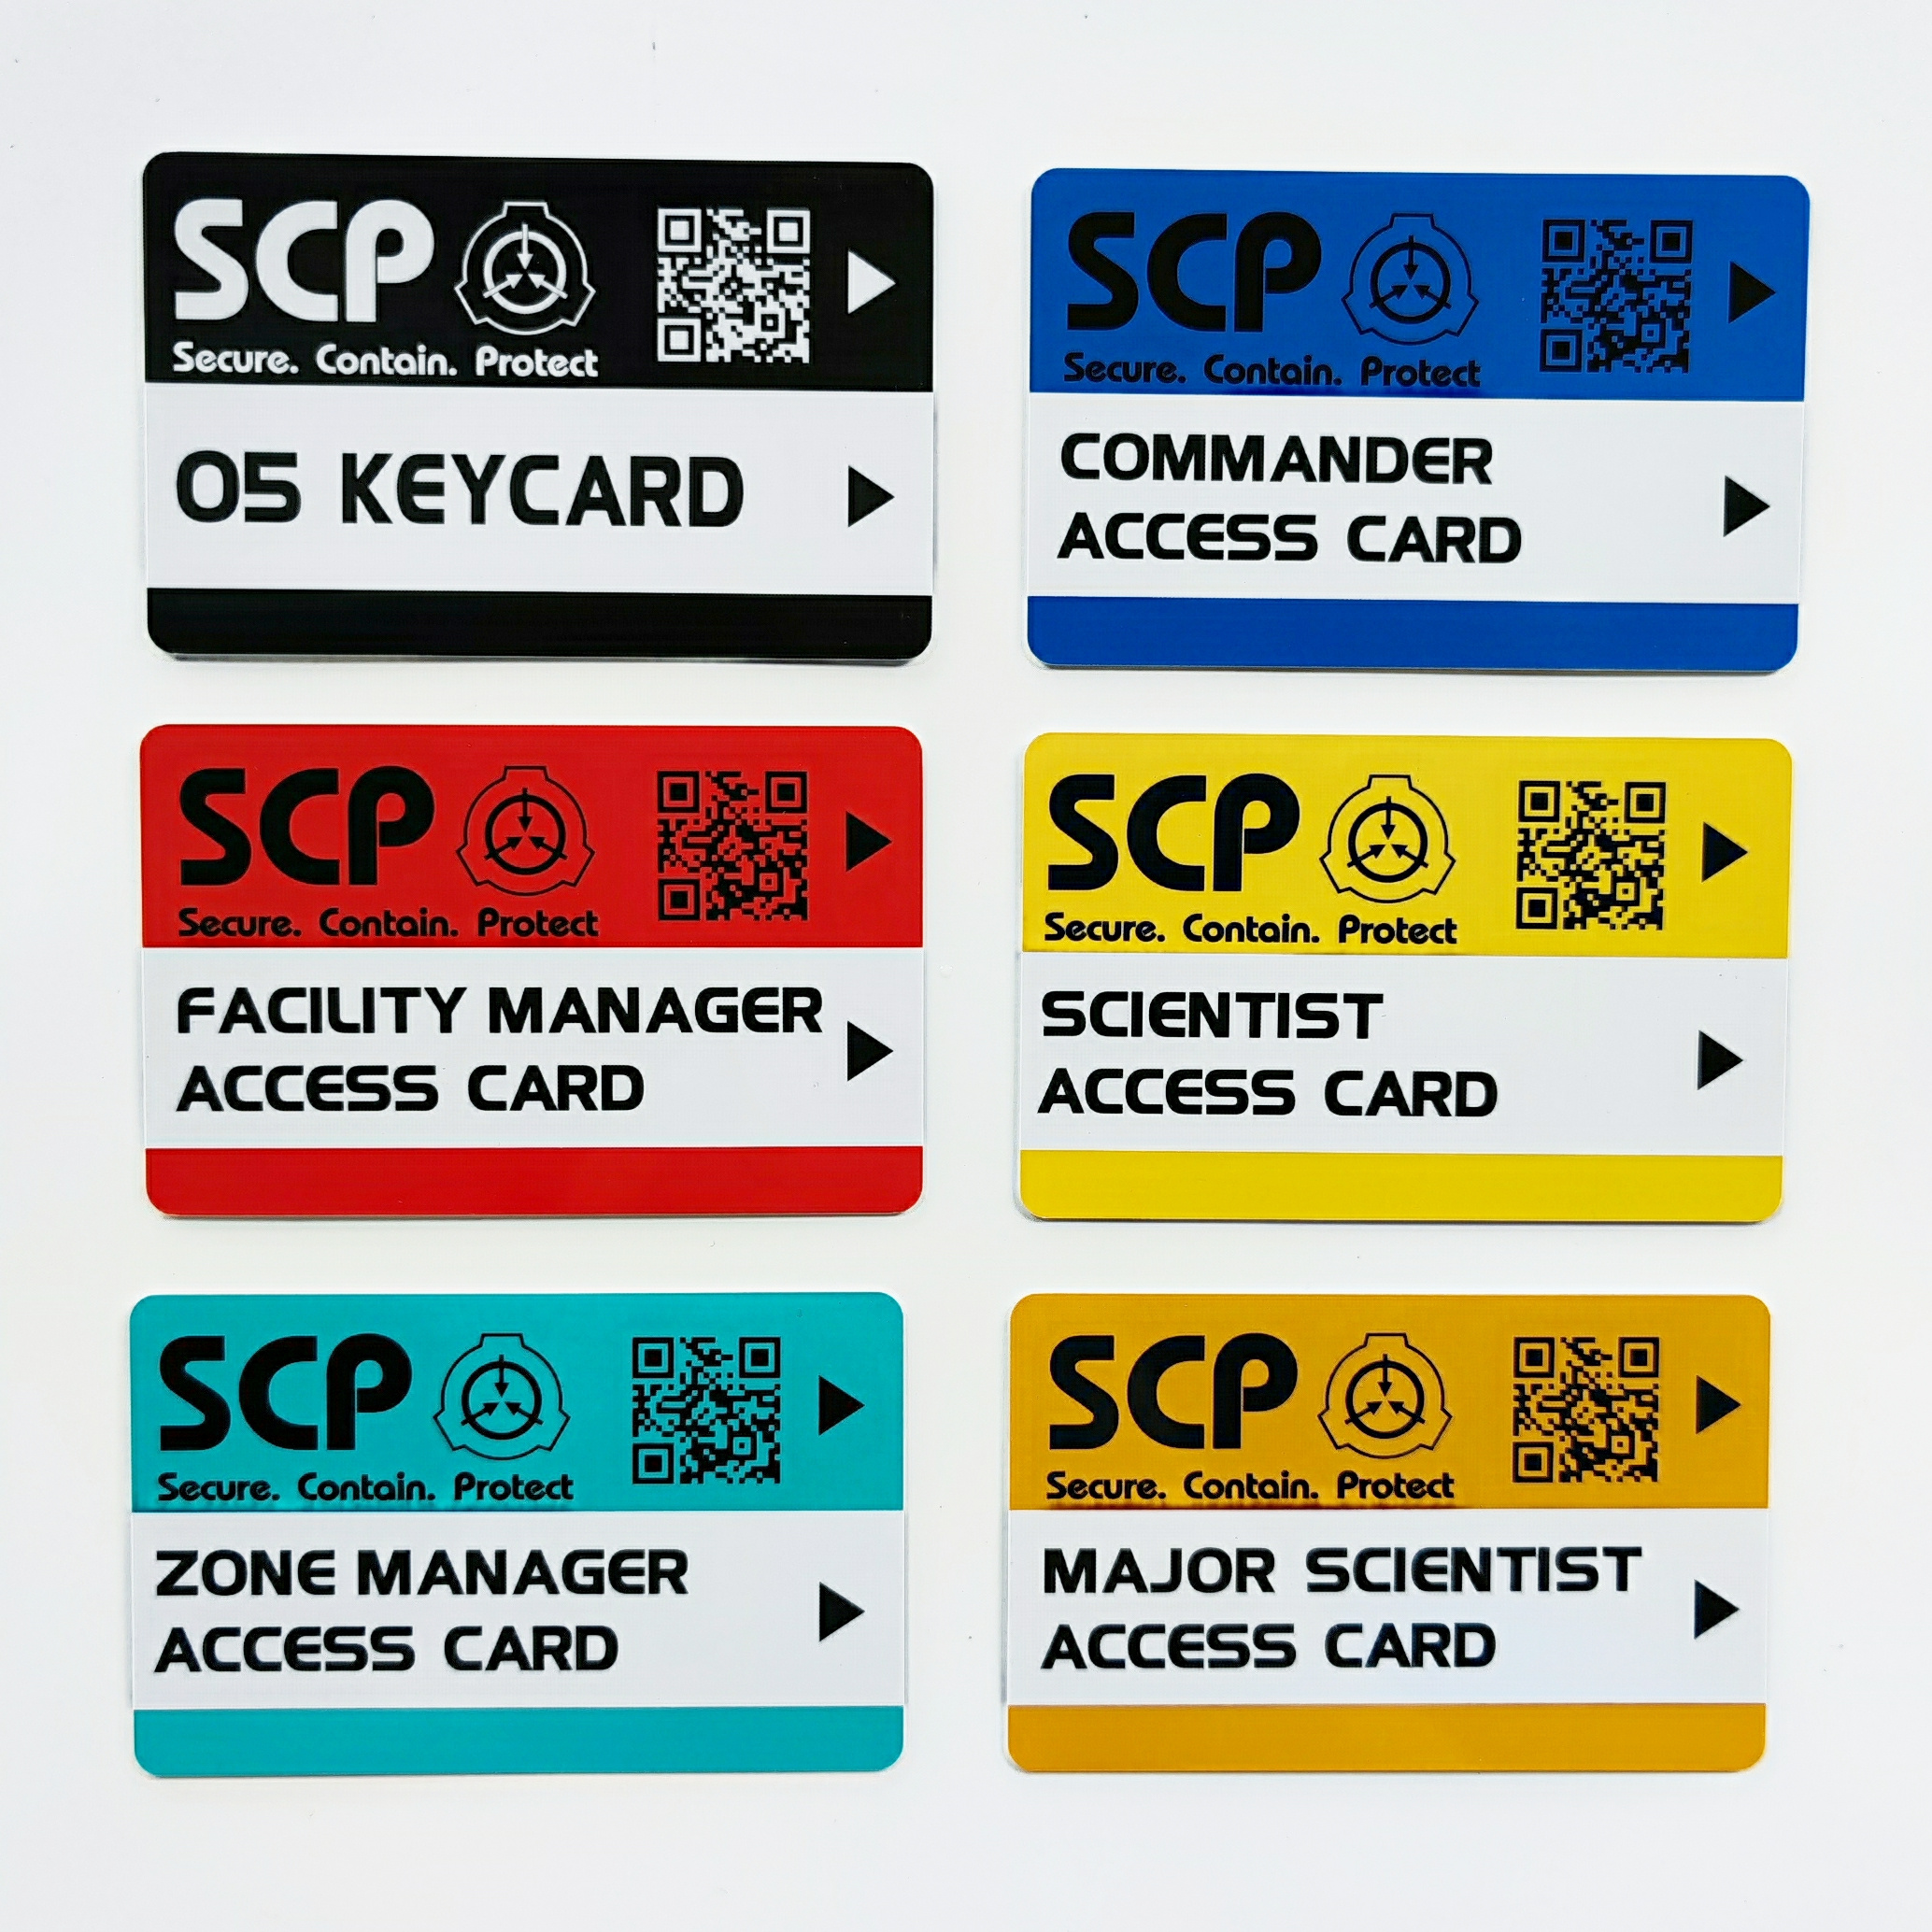 SCP Foundation Secure Access ID Cards Secret Laboratory -  Denmark